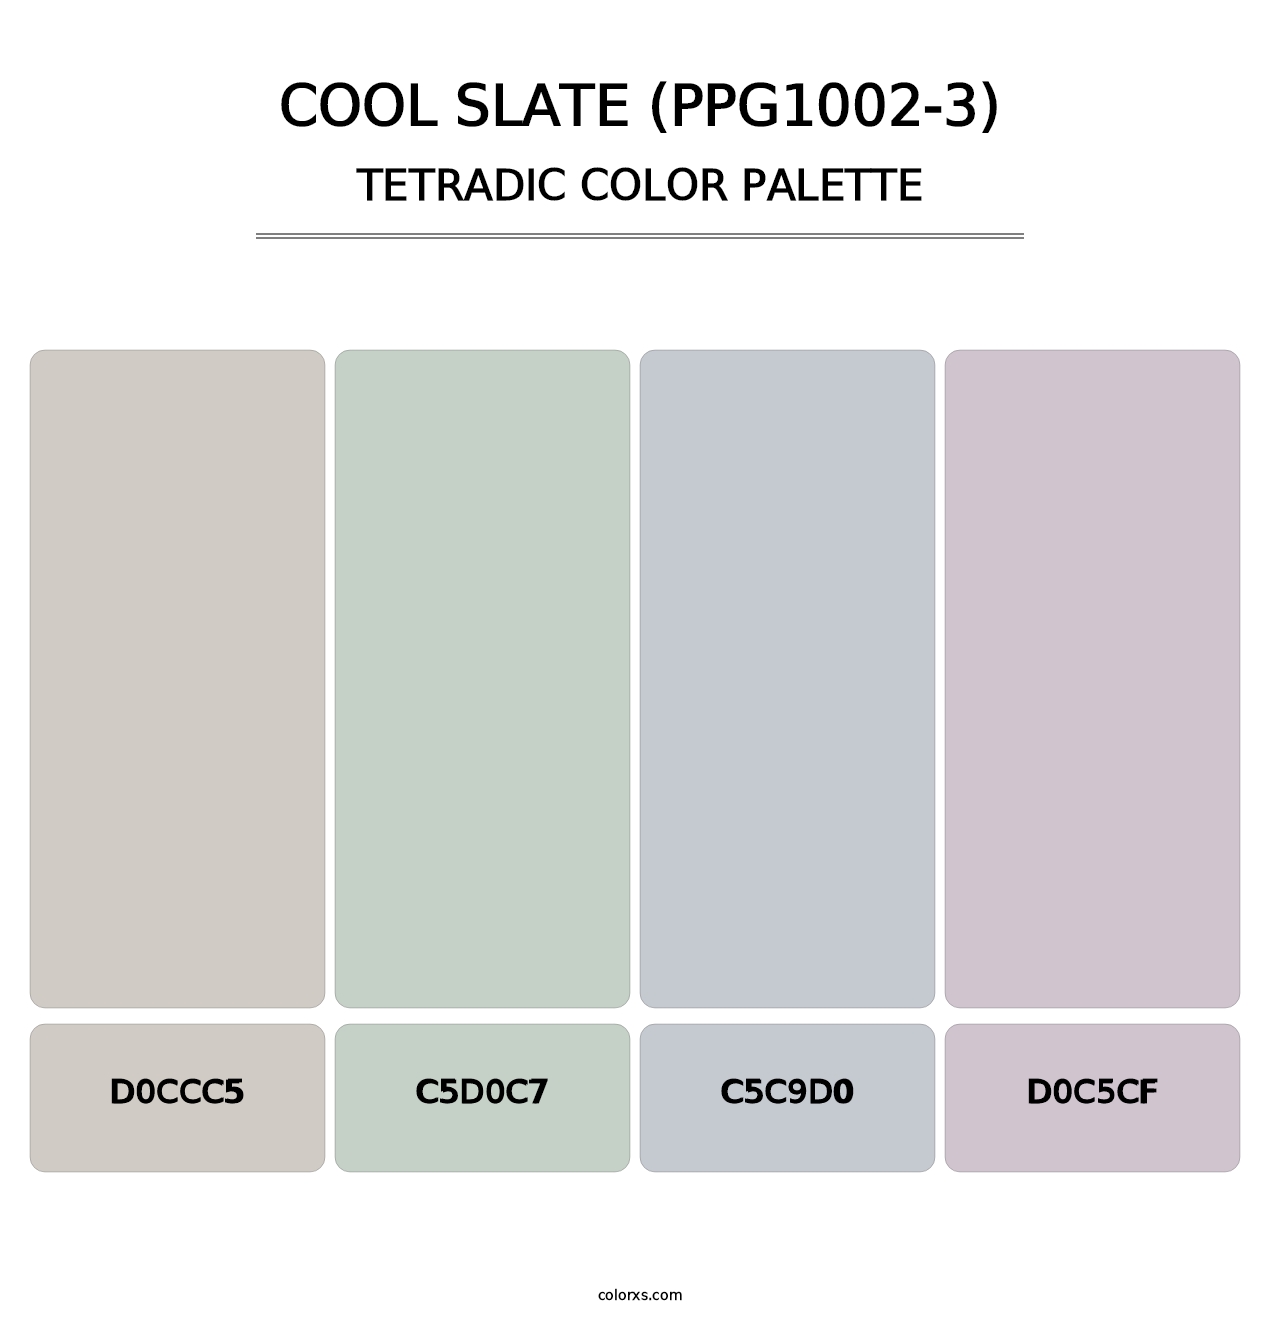 Cool Slate (PPG1002-3) - Tetradic Color Palette